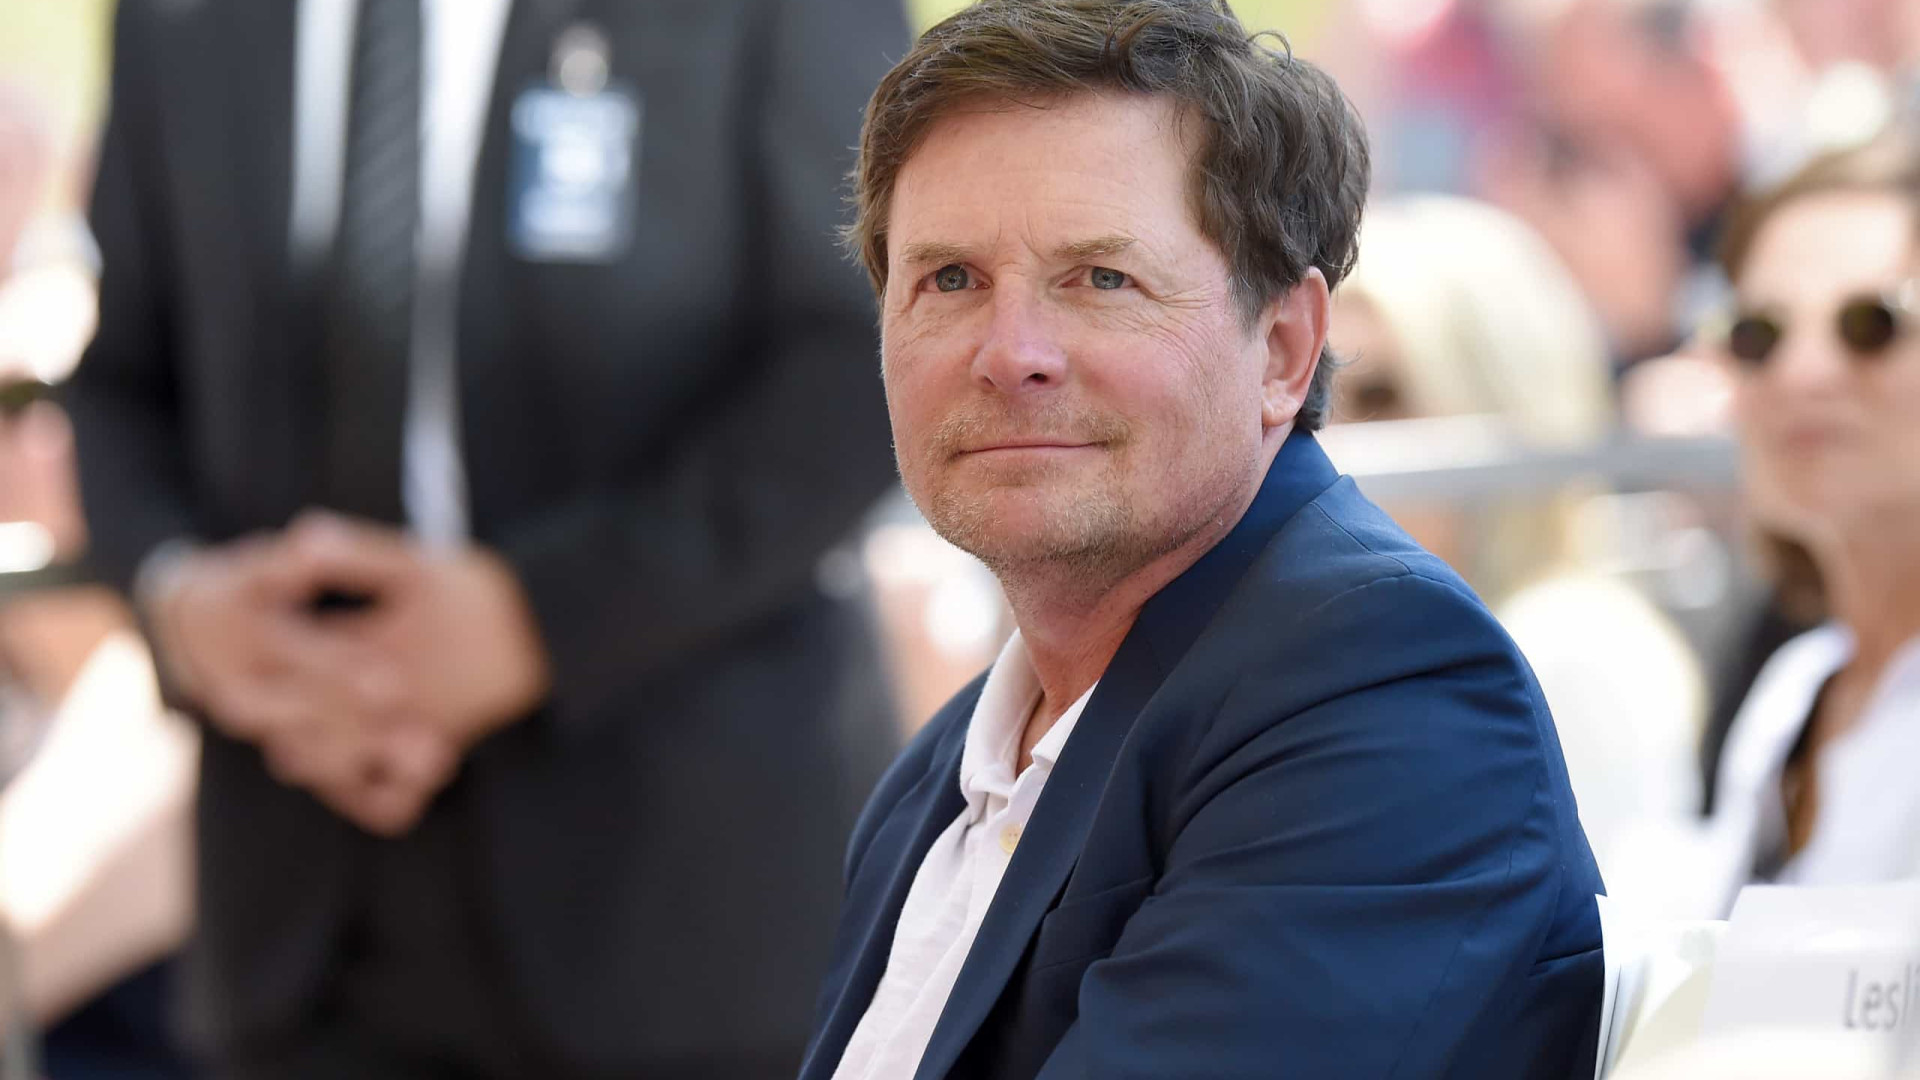 Michael J. Fox diz que 'era preciso ter talento' para ser famoso nos anos 1980